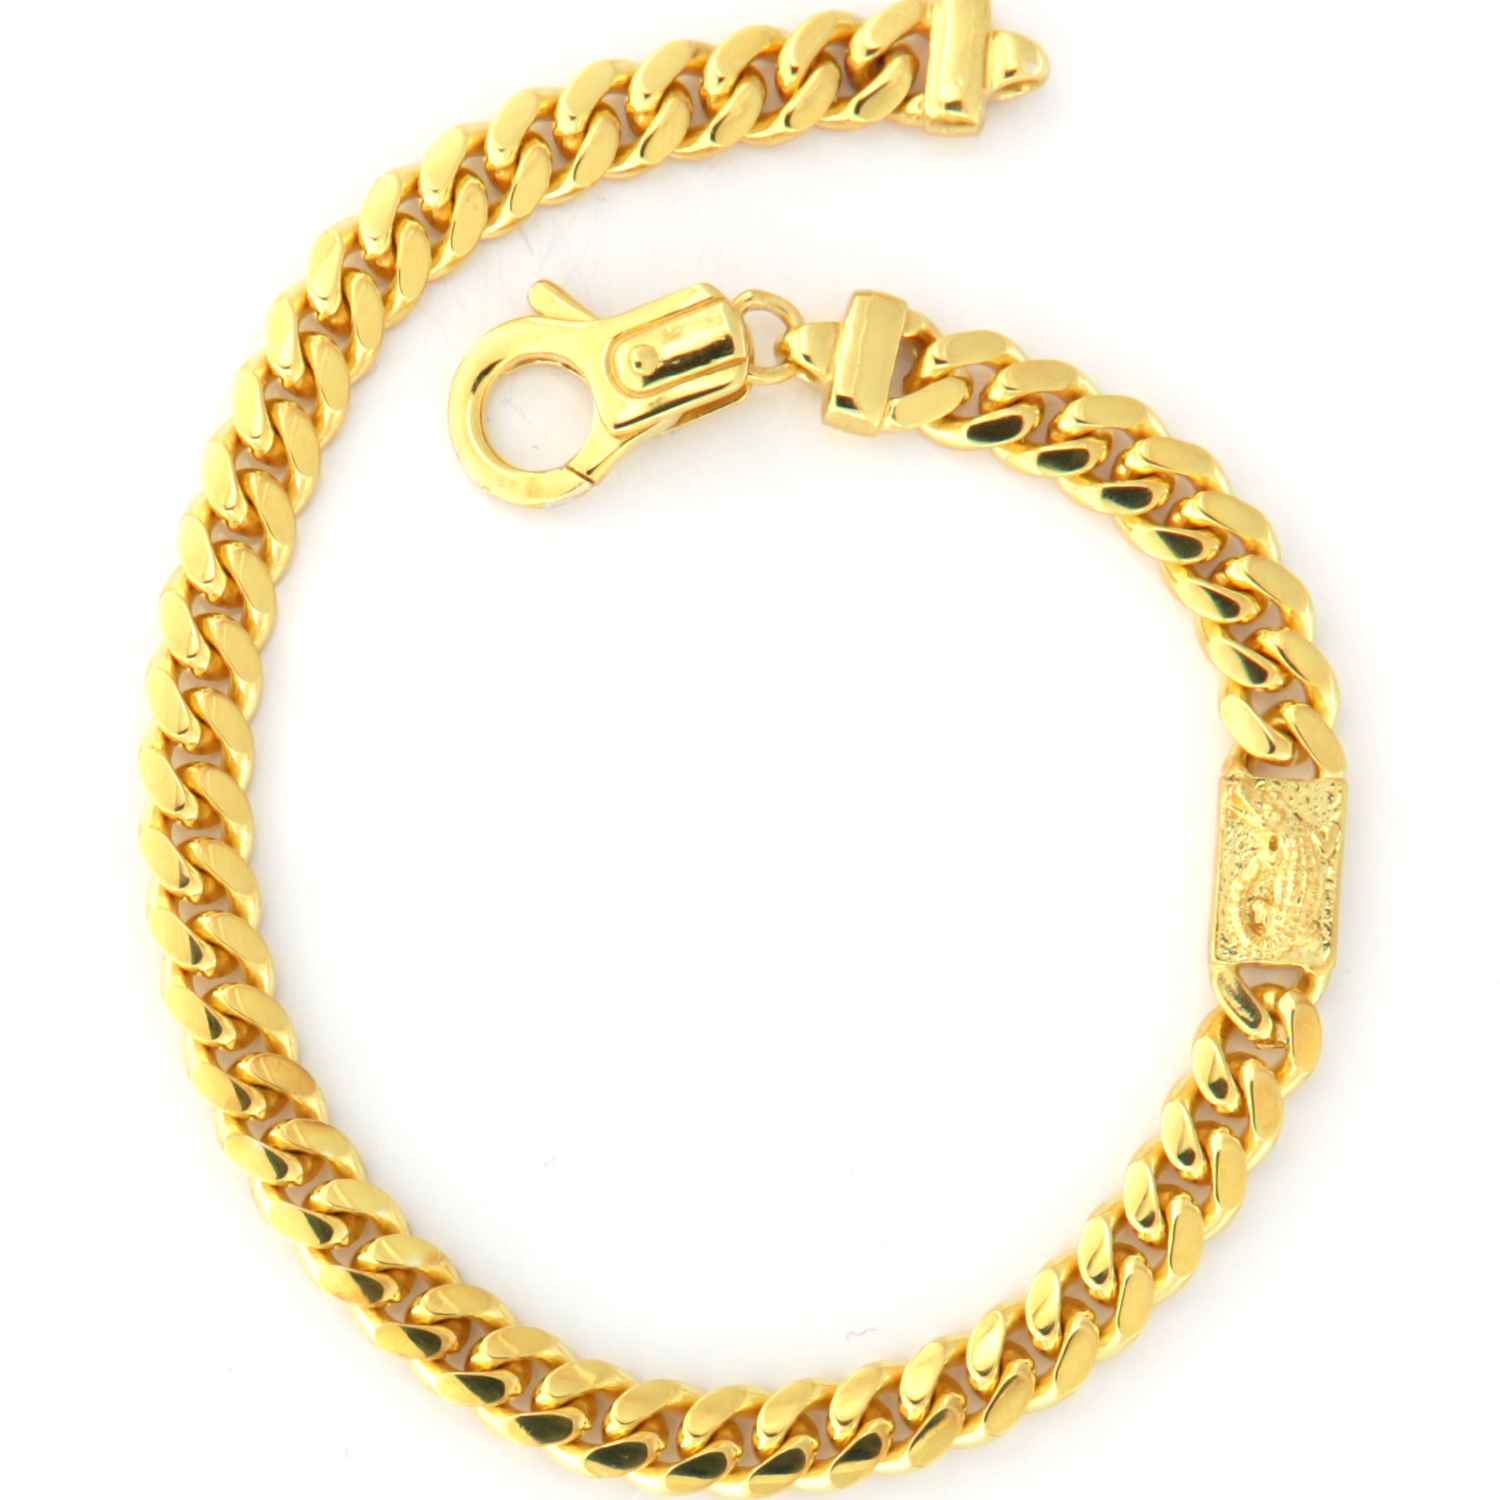 Bracelet men's 1 crocodile element gold plated-image